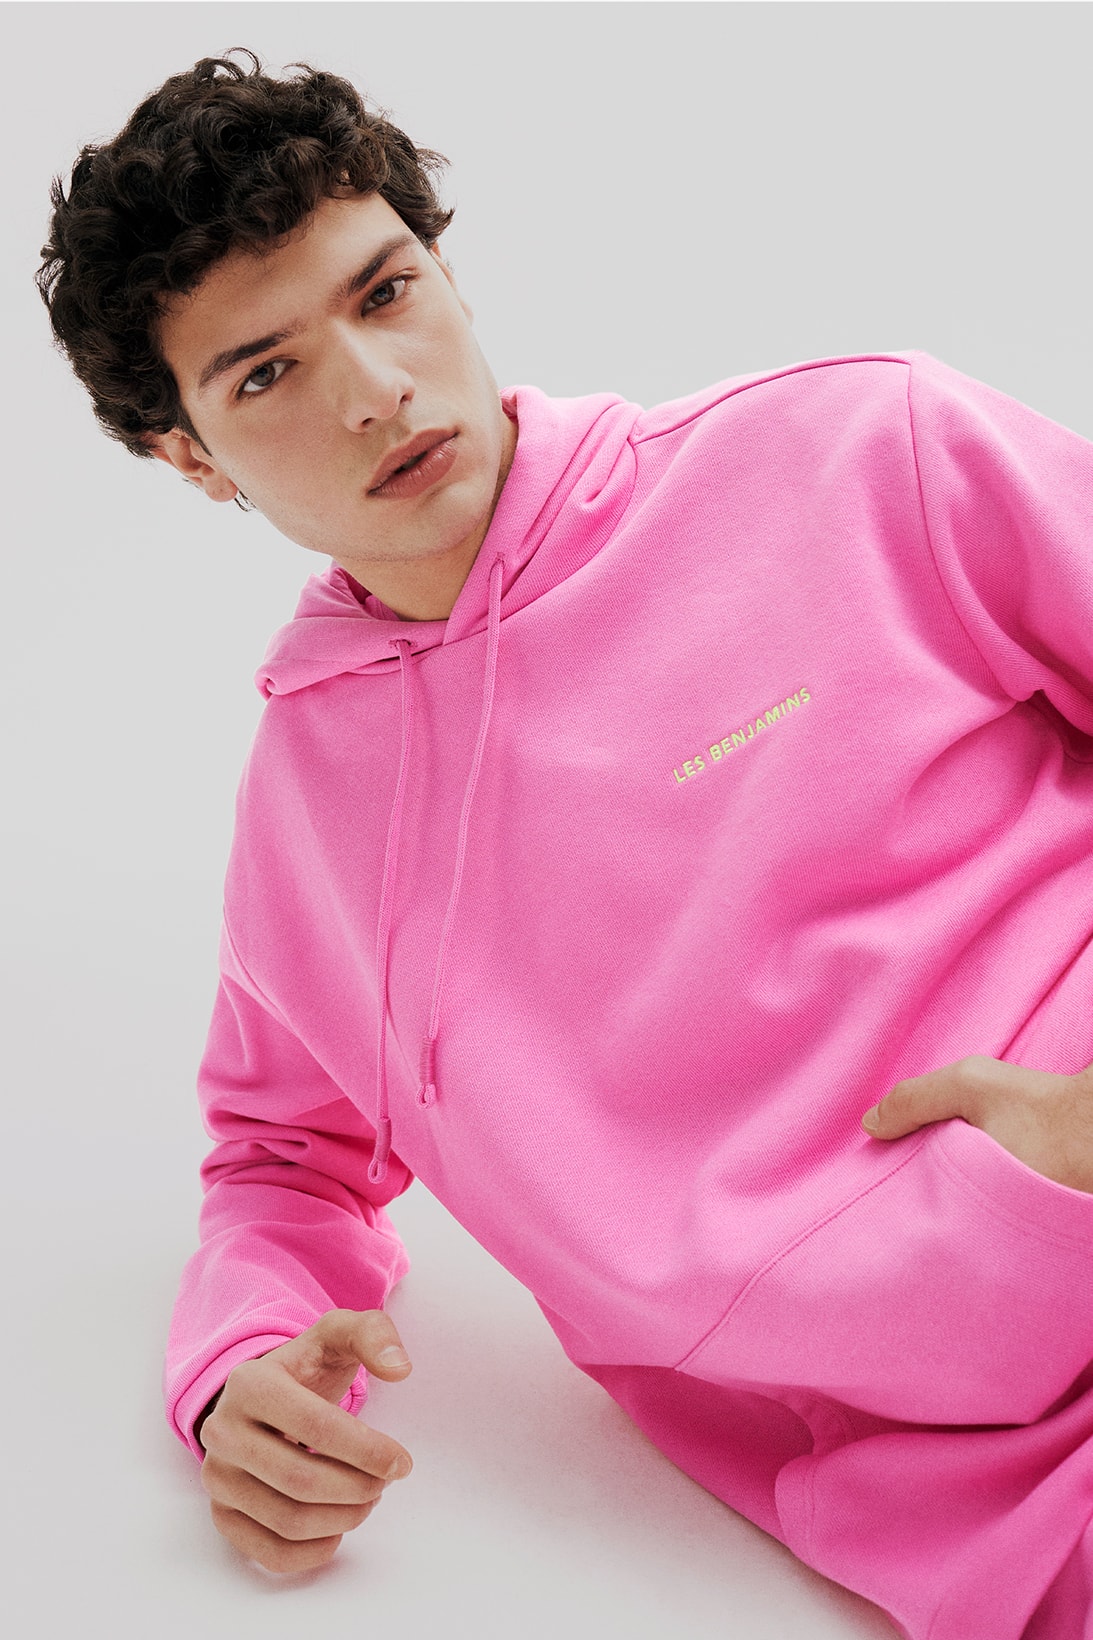 Les Benjamins "Essentials 4.0" Collection Streetwear Hoodies Sweatpants Hoodies Pink Front